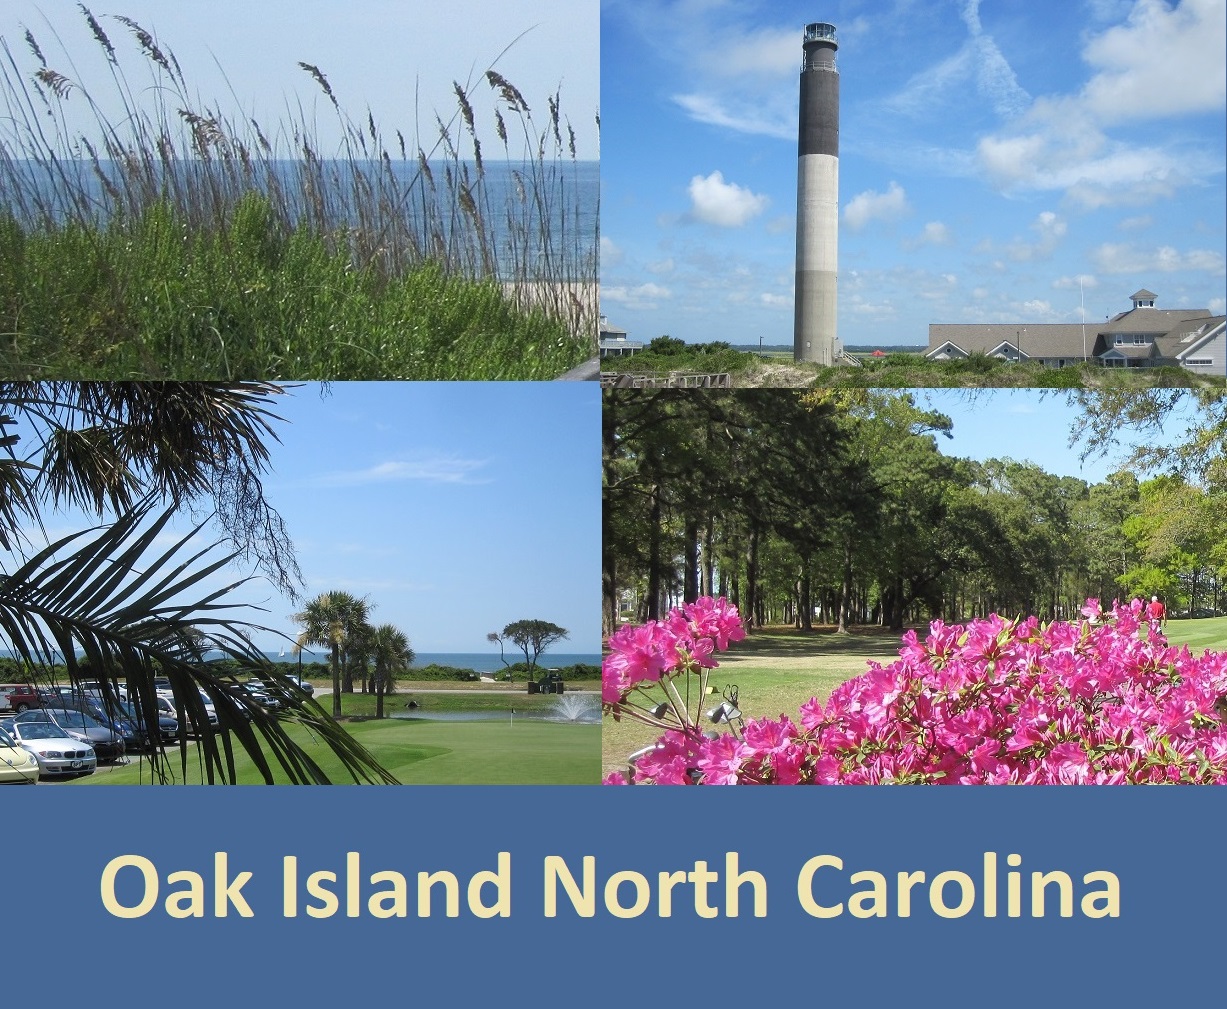 Oak Island NC photos